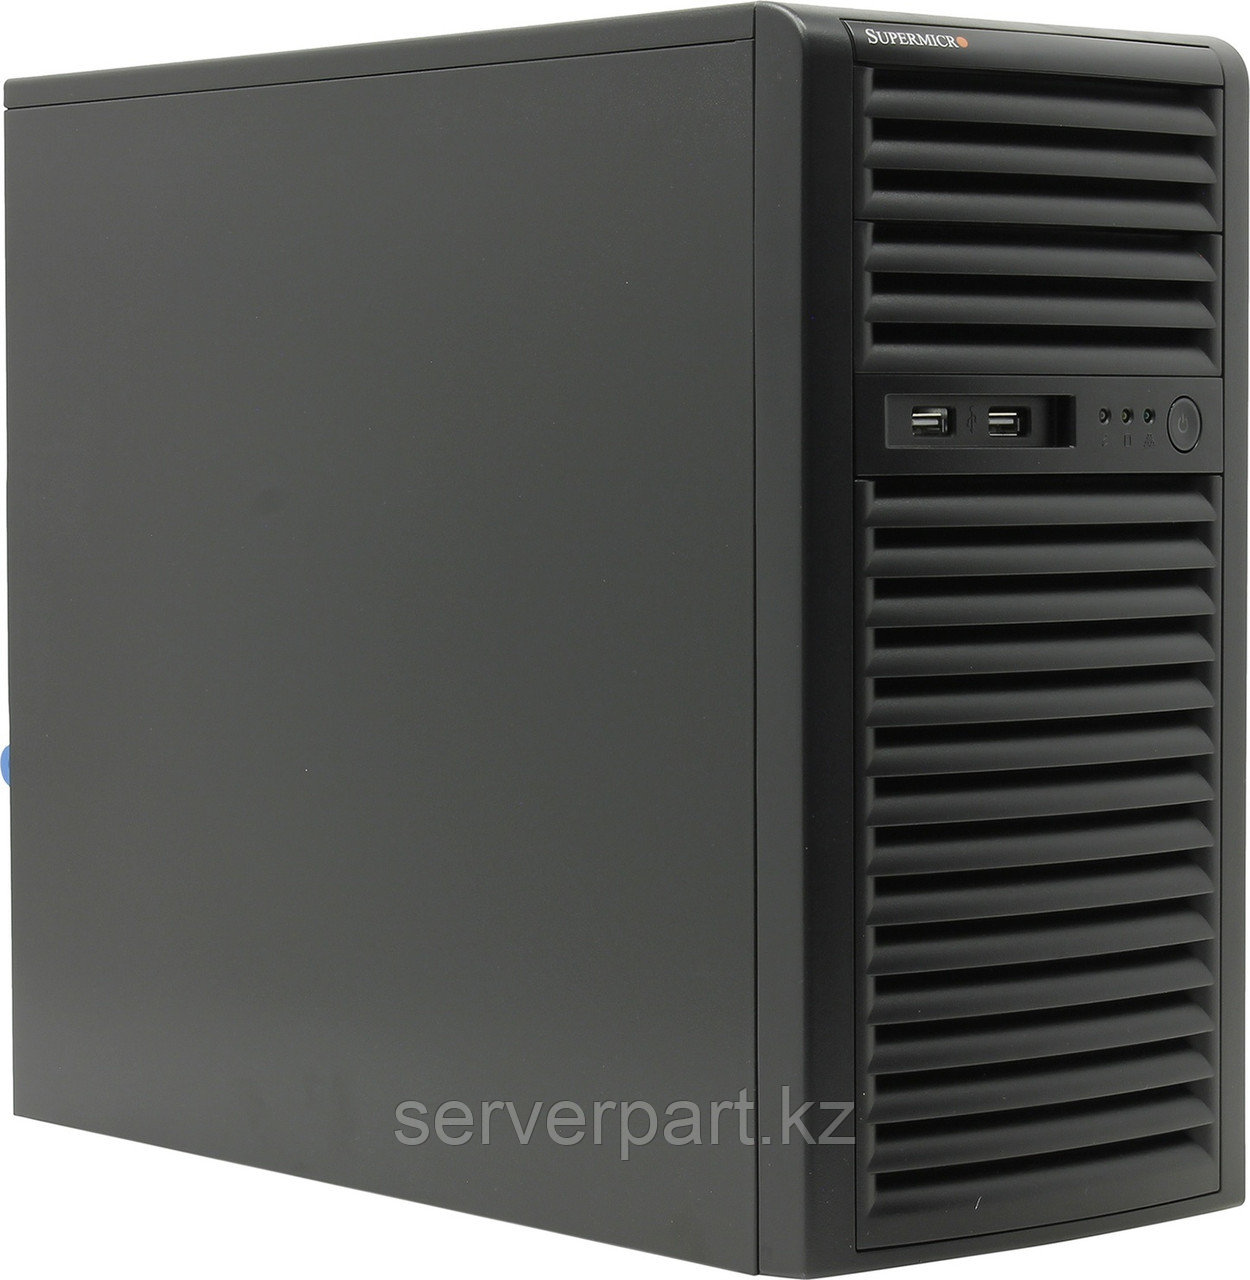 Сервер Supermicro 732-500B\X10DRL-F Tower 4LFF/1х8-core Intel Xeon E5-2640v3 2.6GHz/no RAM/no HDD